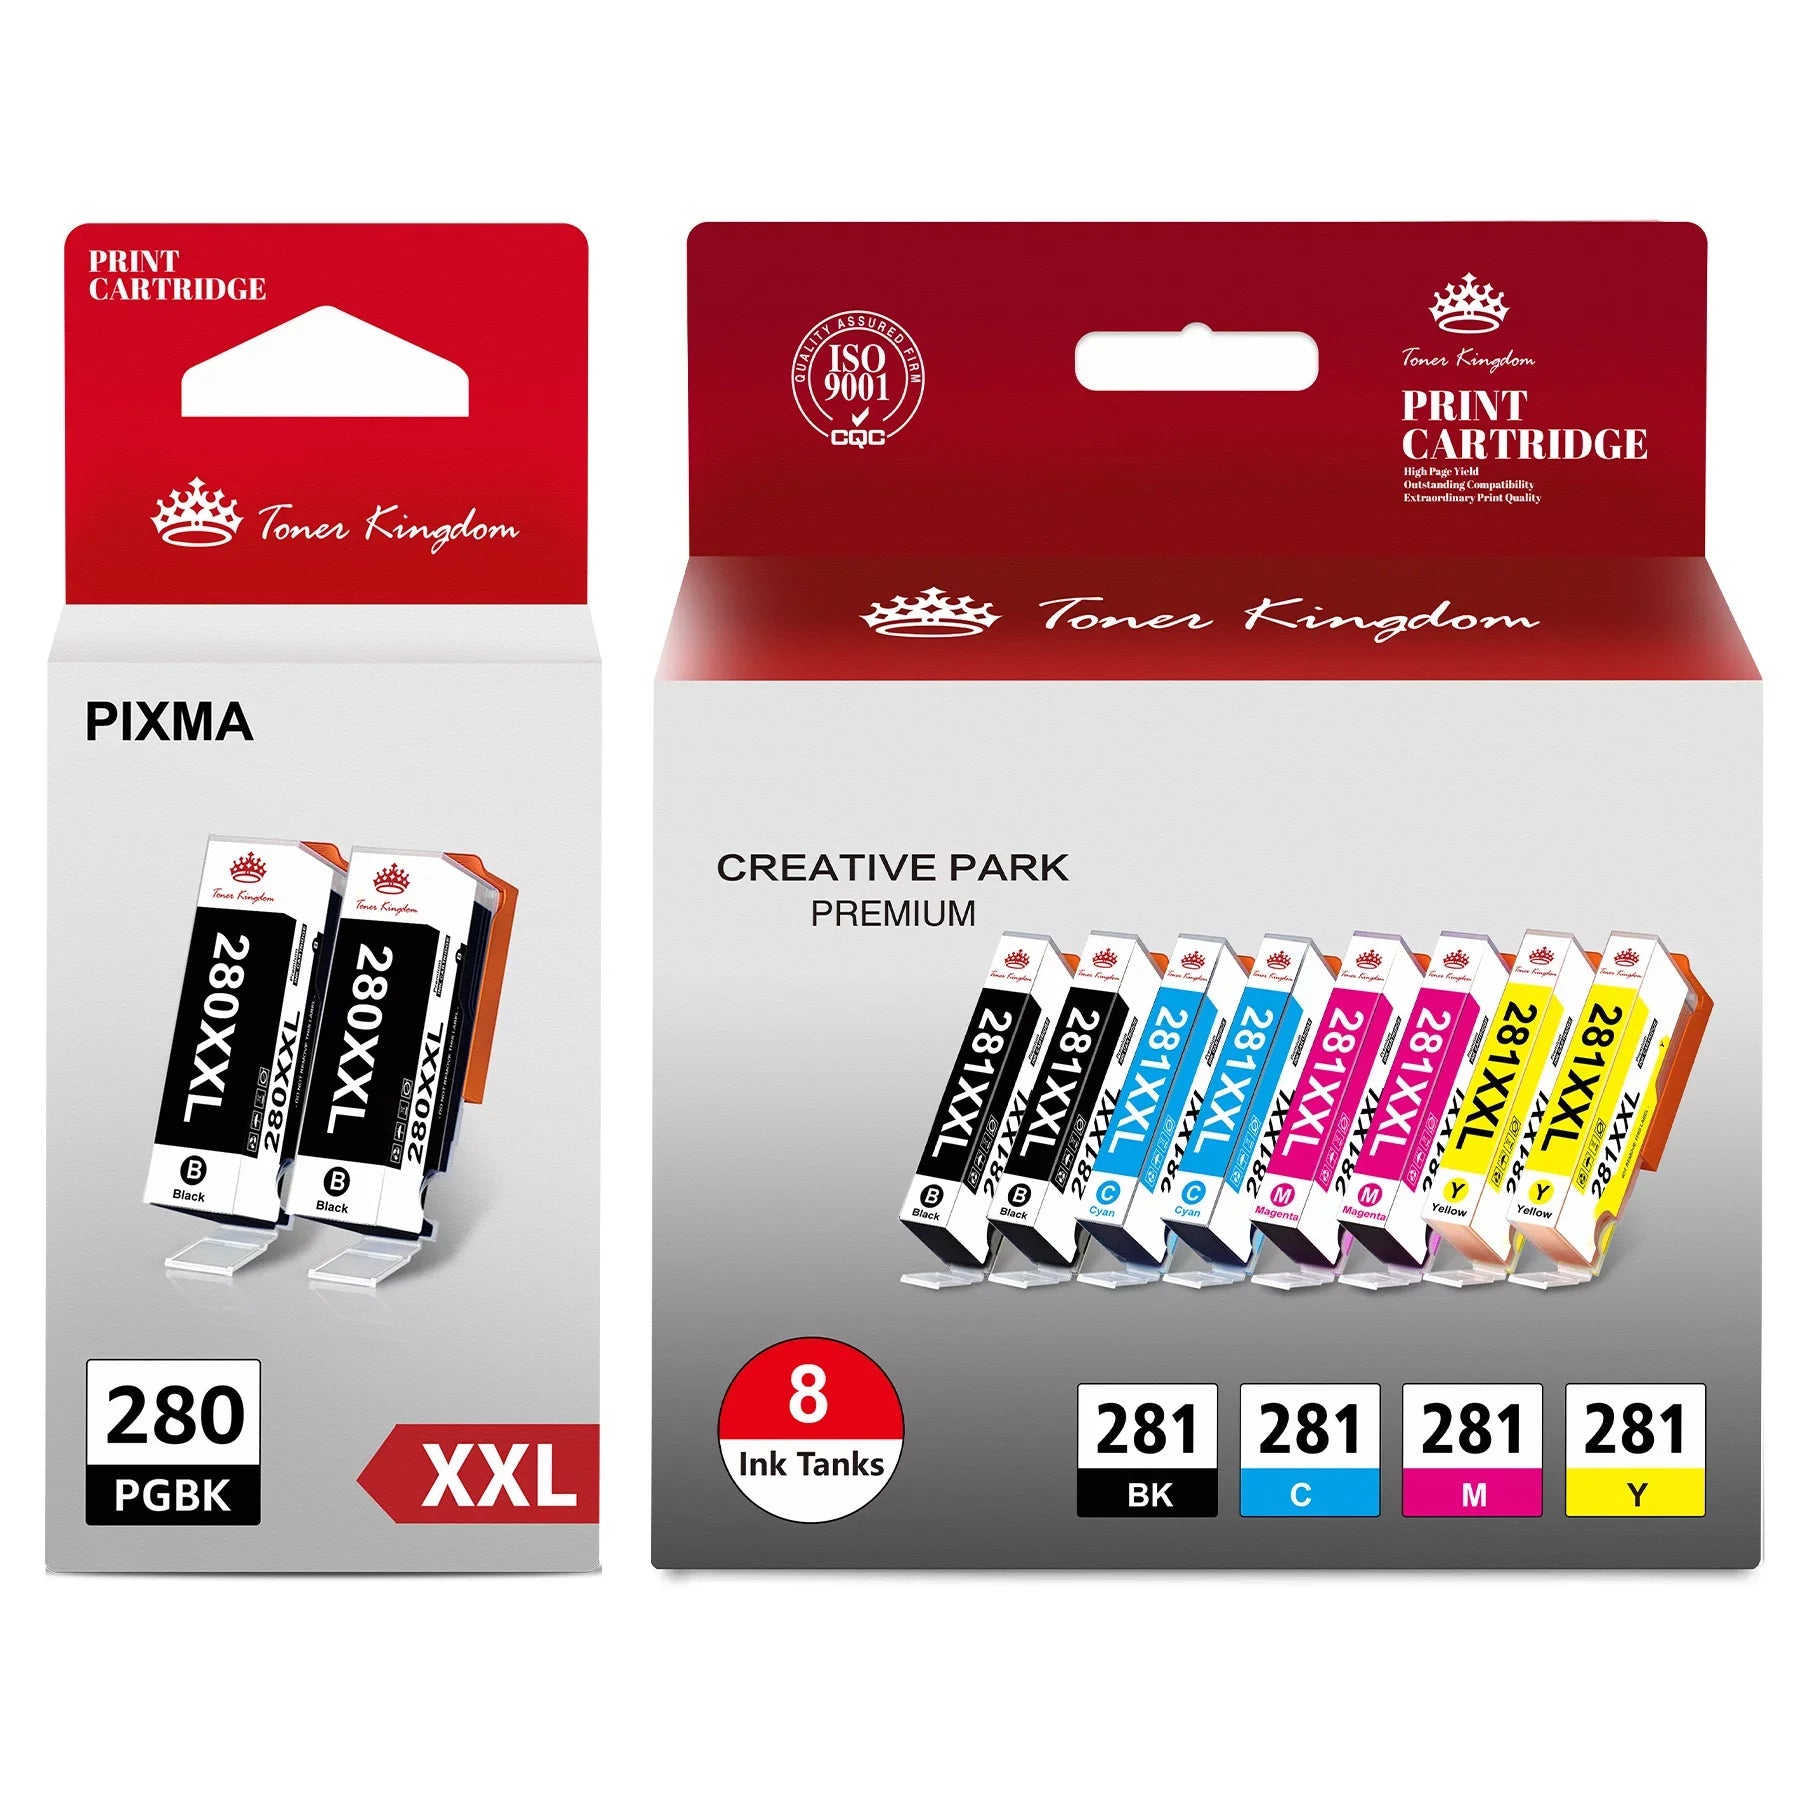 Ink & Toner-Toner Kingdom Ink Cartridges for Canon (PGBK Black Cyan Magenta Yellow, 10-Pack)